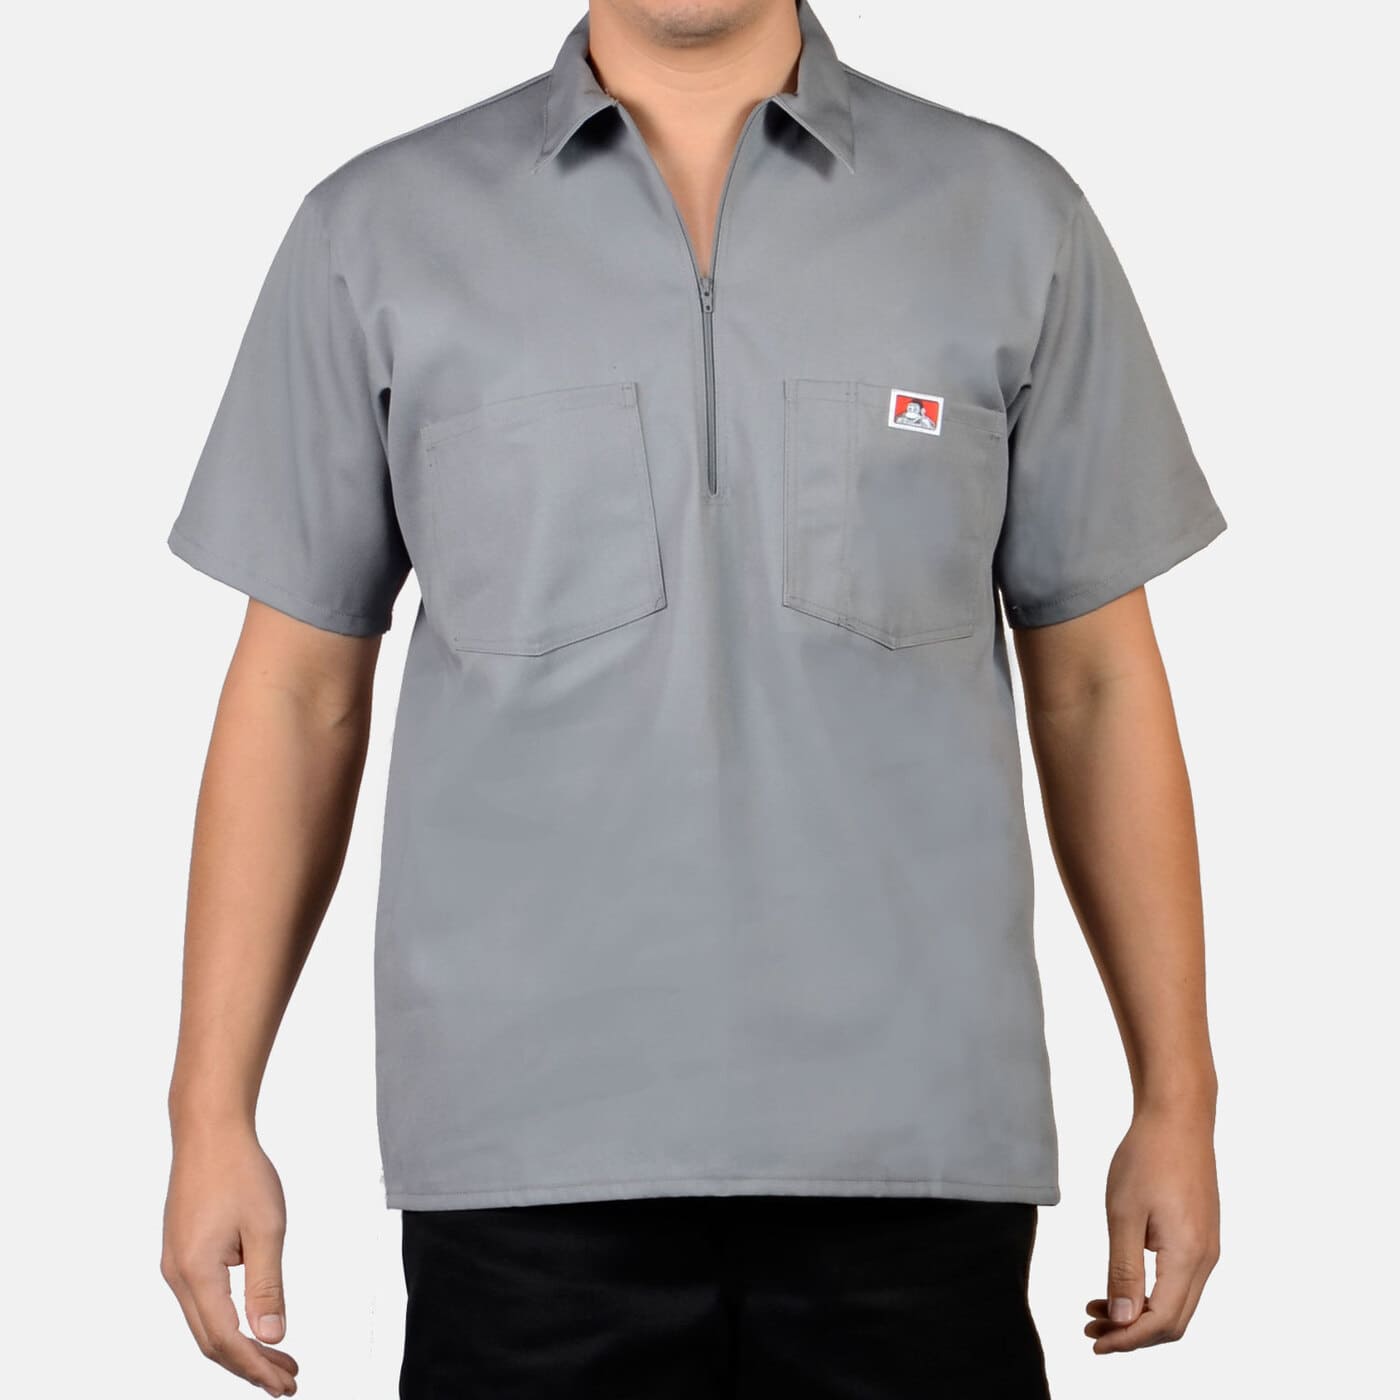 Ben Davis Men's Short Sleeve Solid Color Cotton Blend Pockets 1/2 Zip Shirt